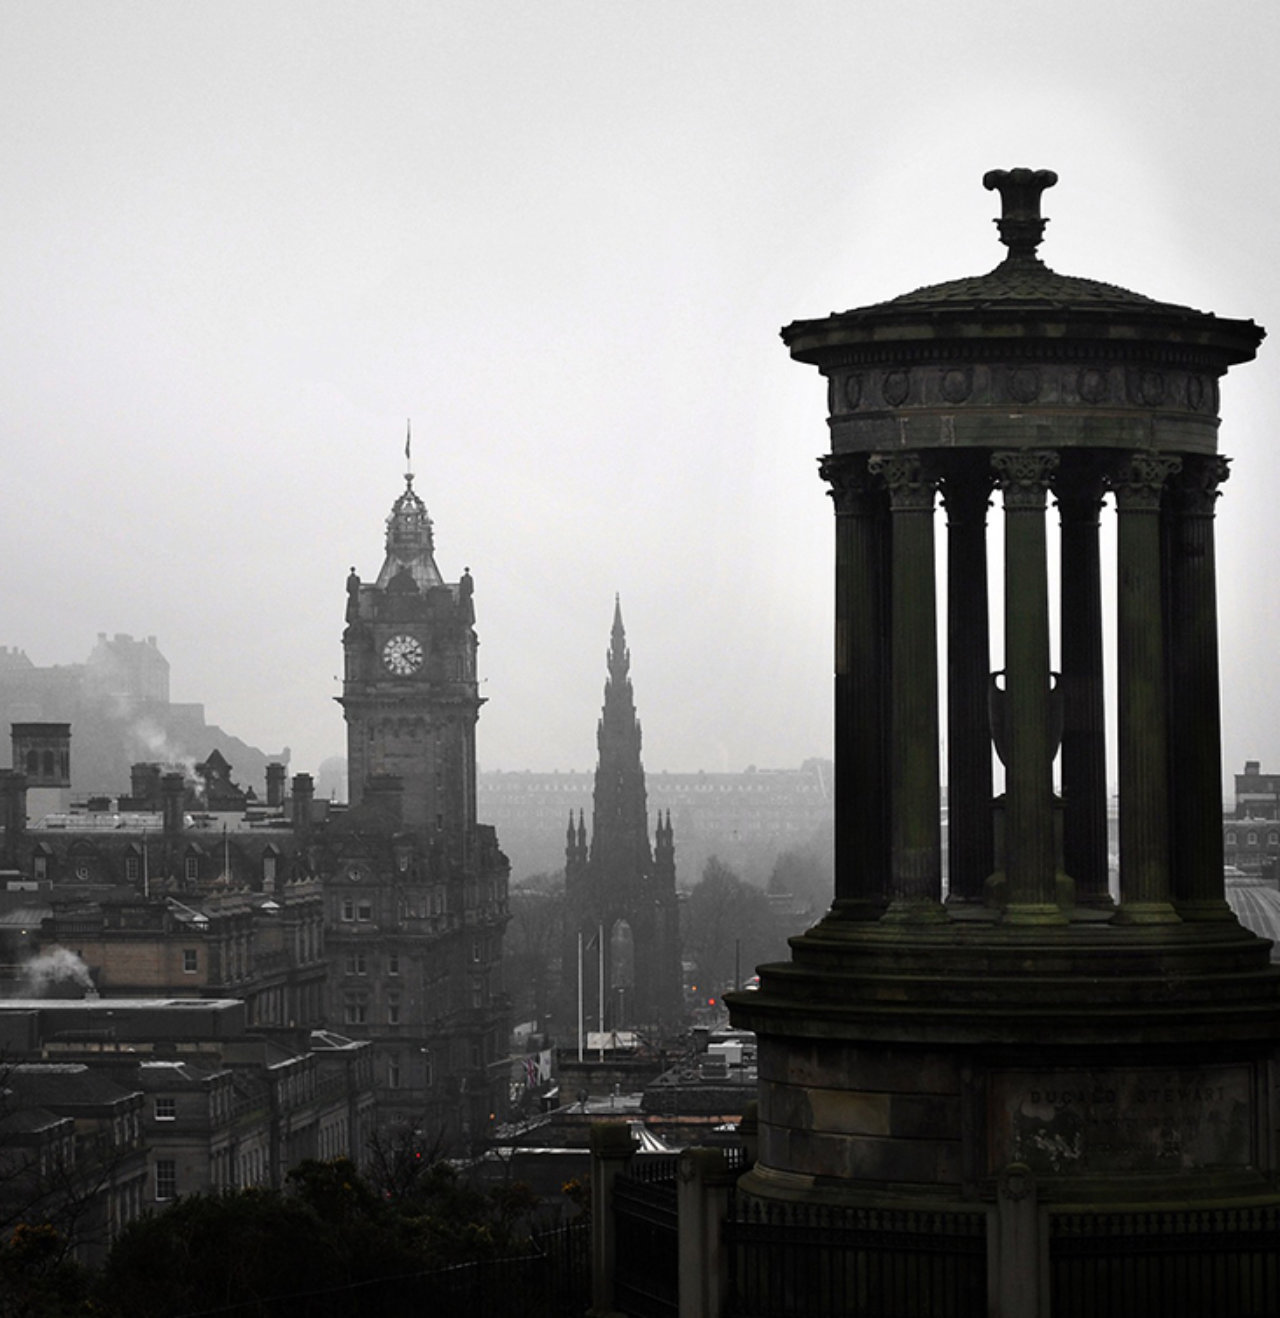 A black and white photo of Edinburgh